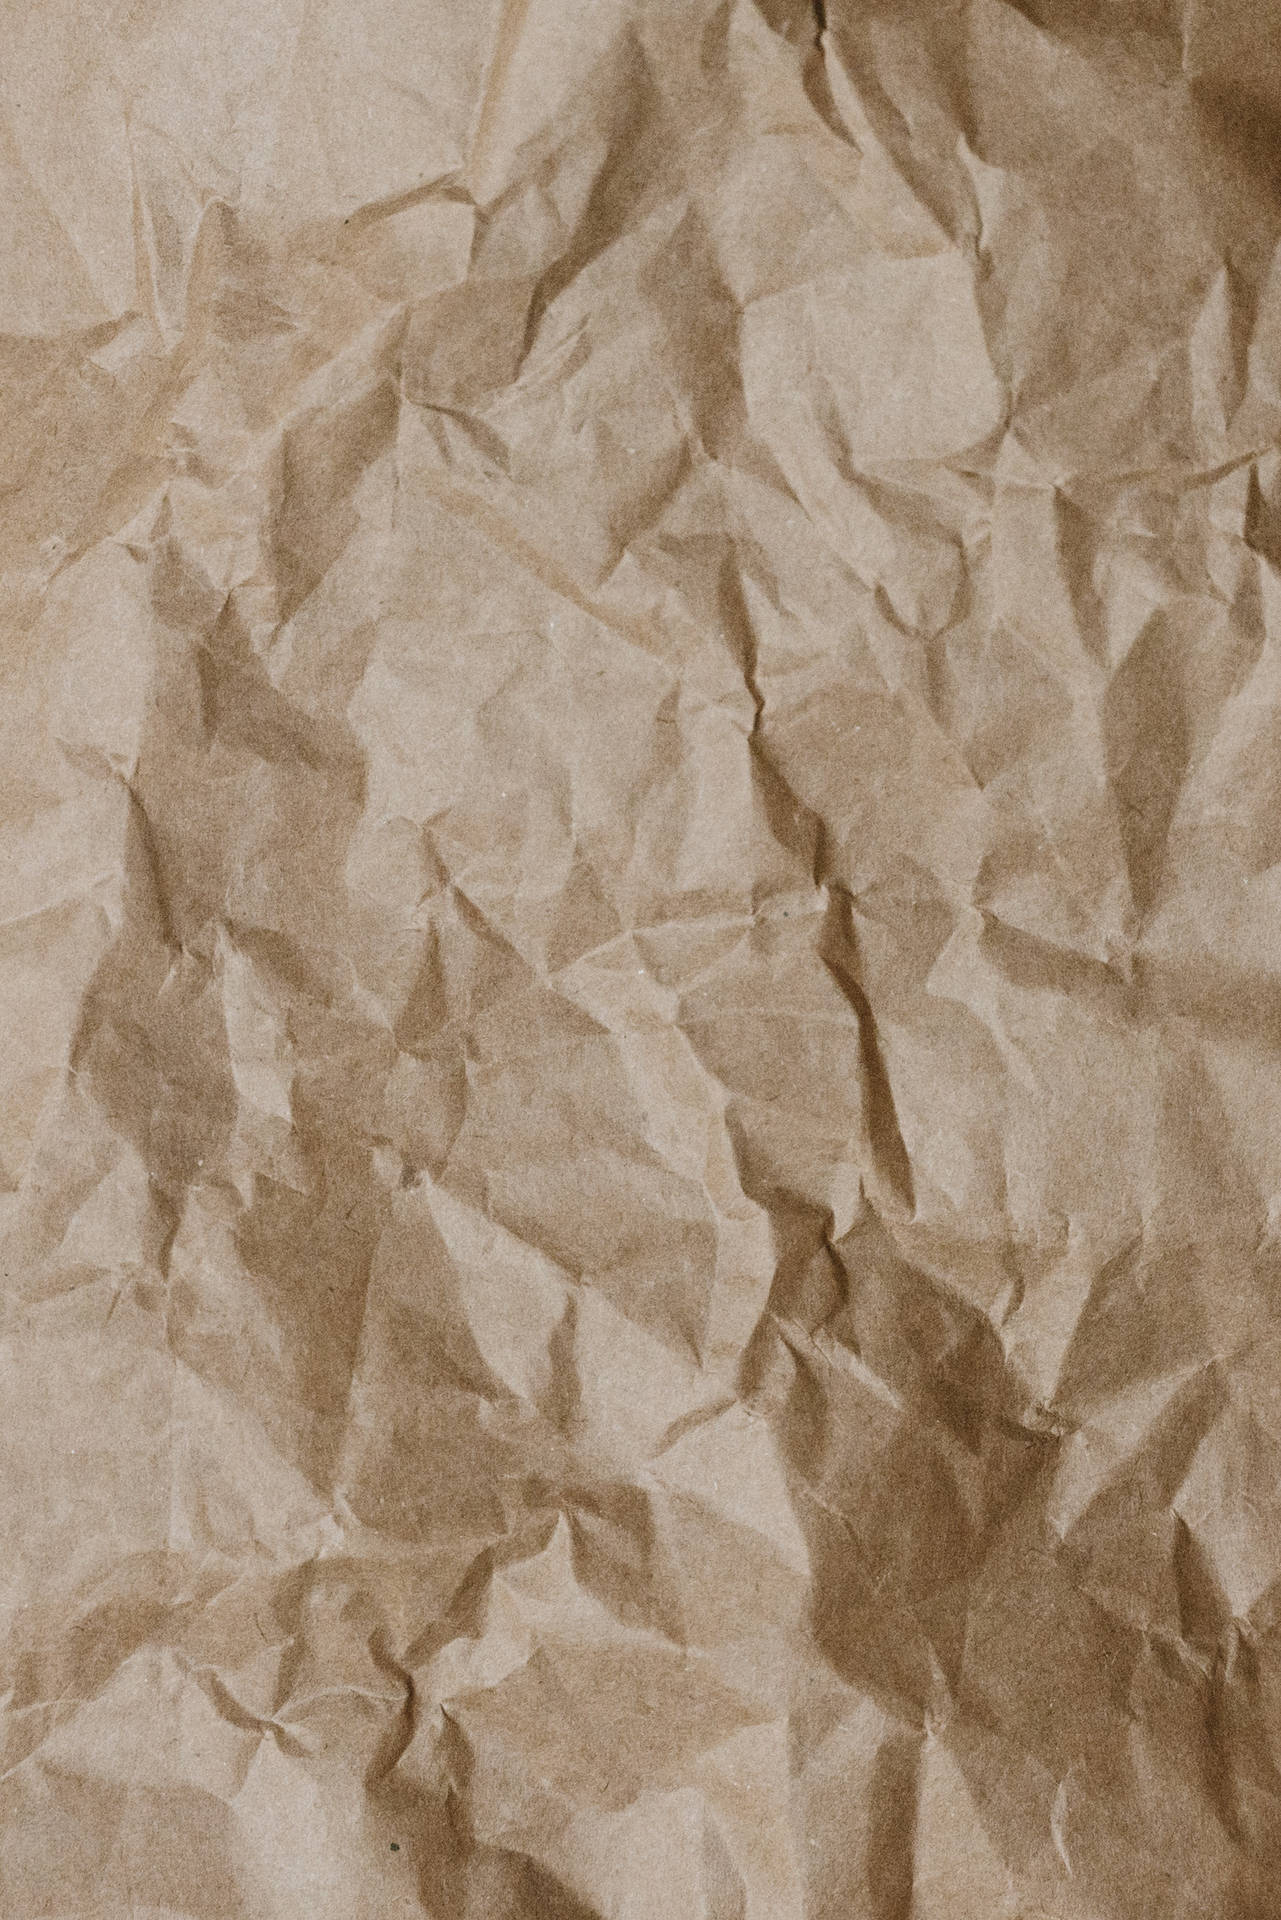 Brown Cardboard Crumpled Paper Background